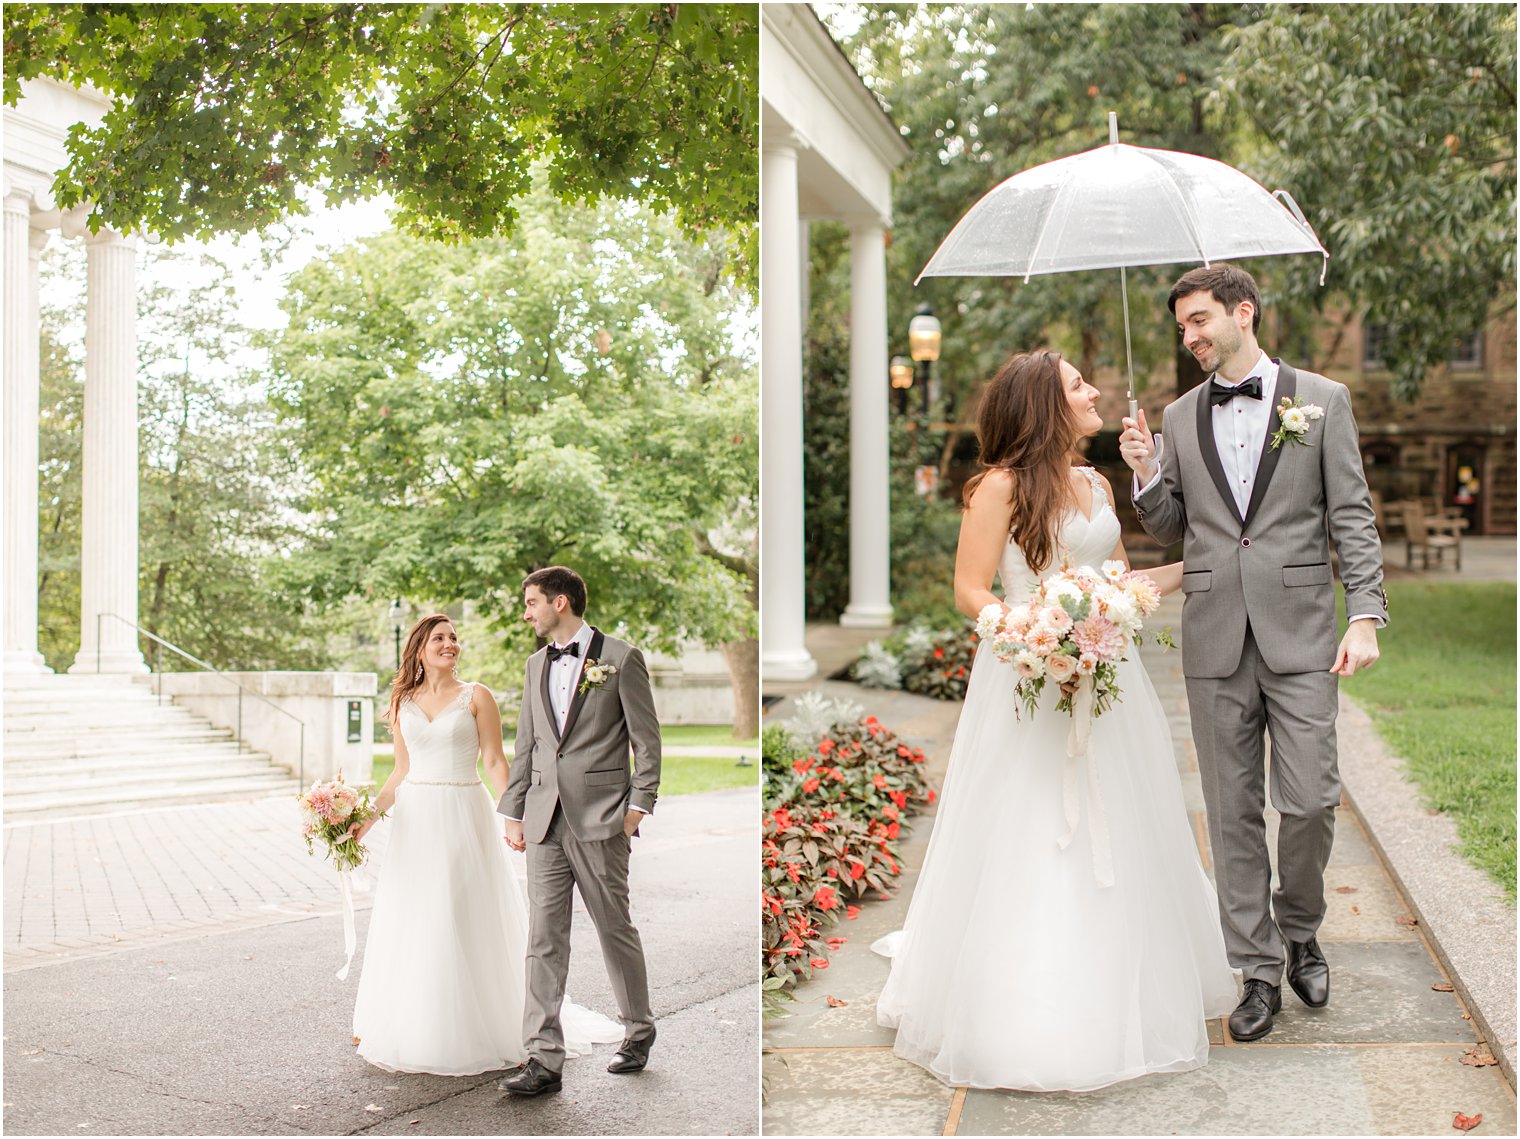 rainy wedding day portraits at Princeton University